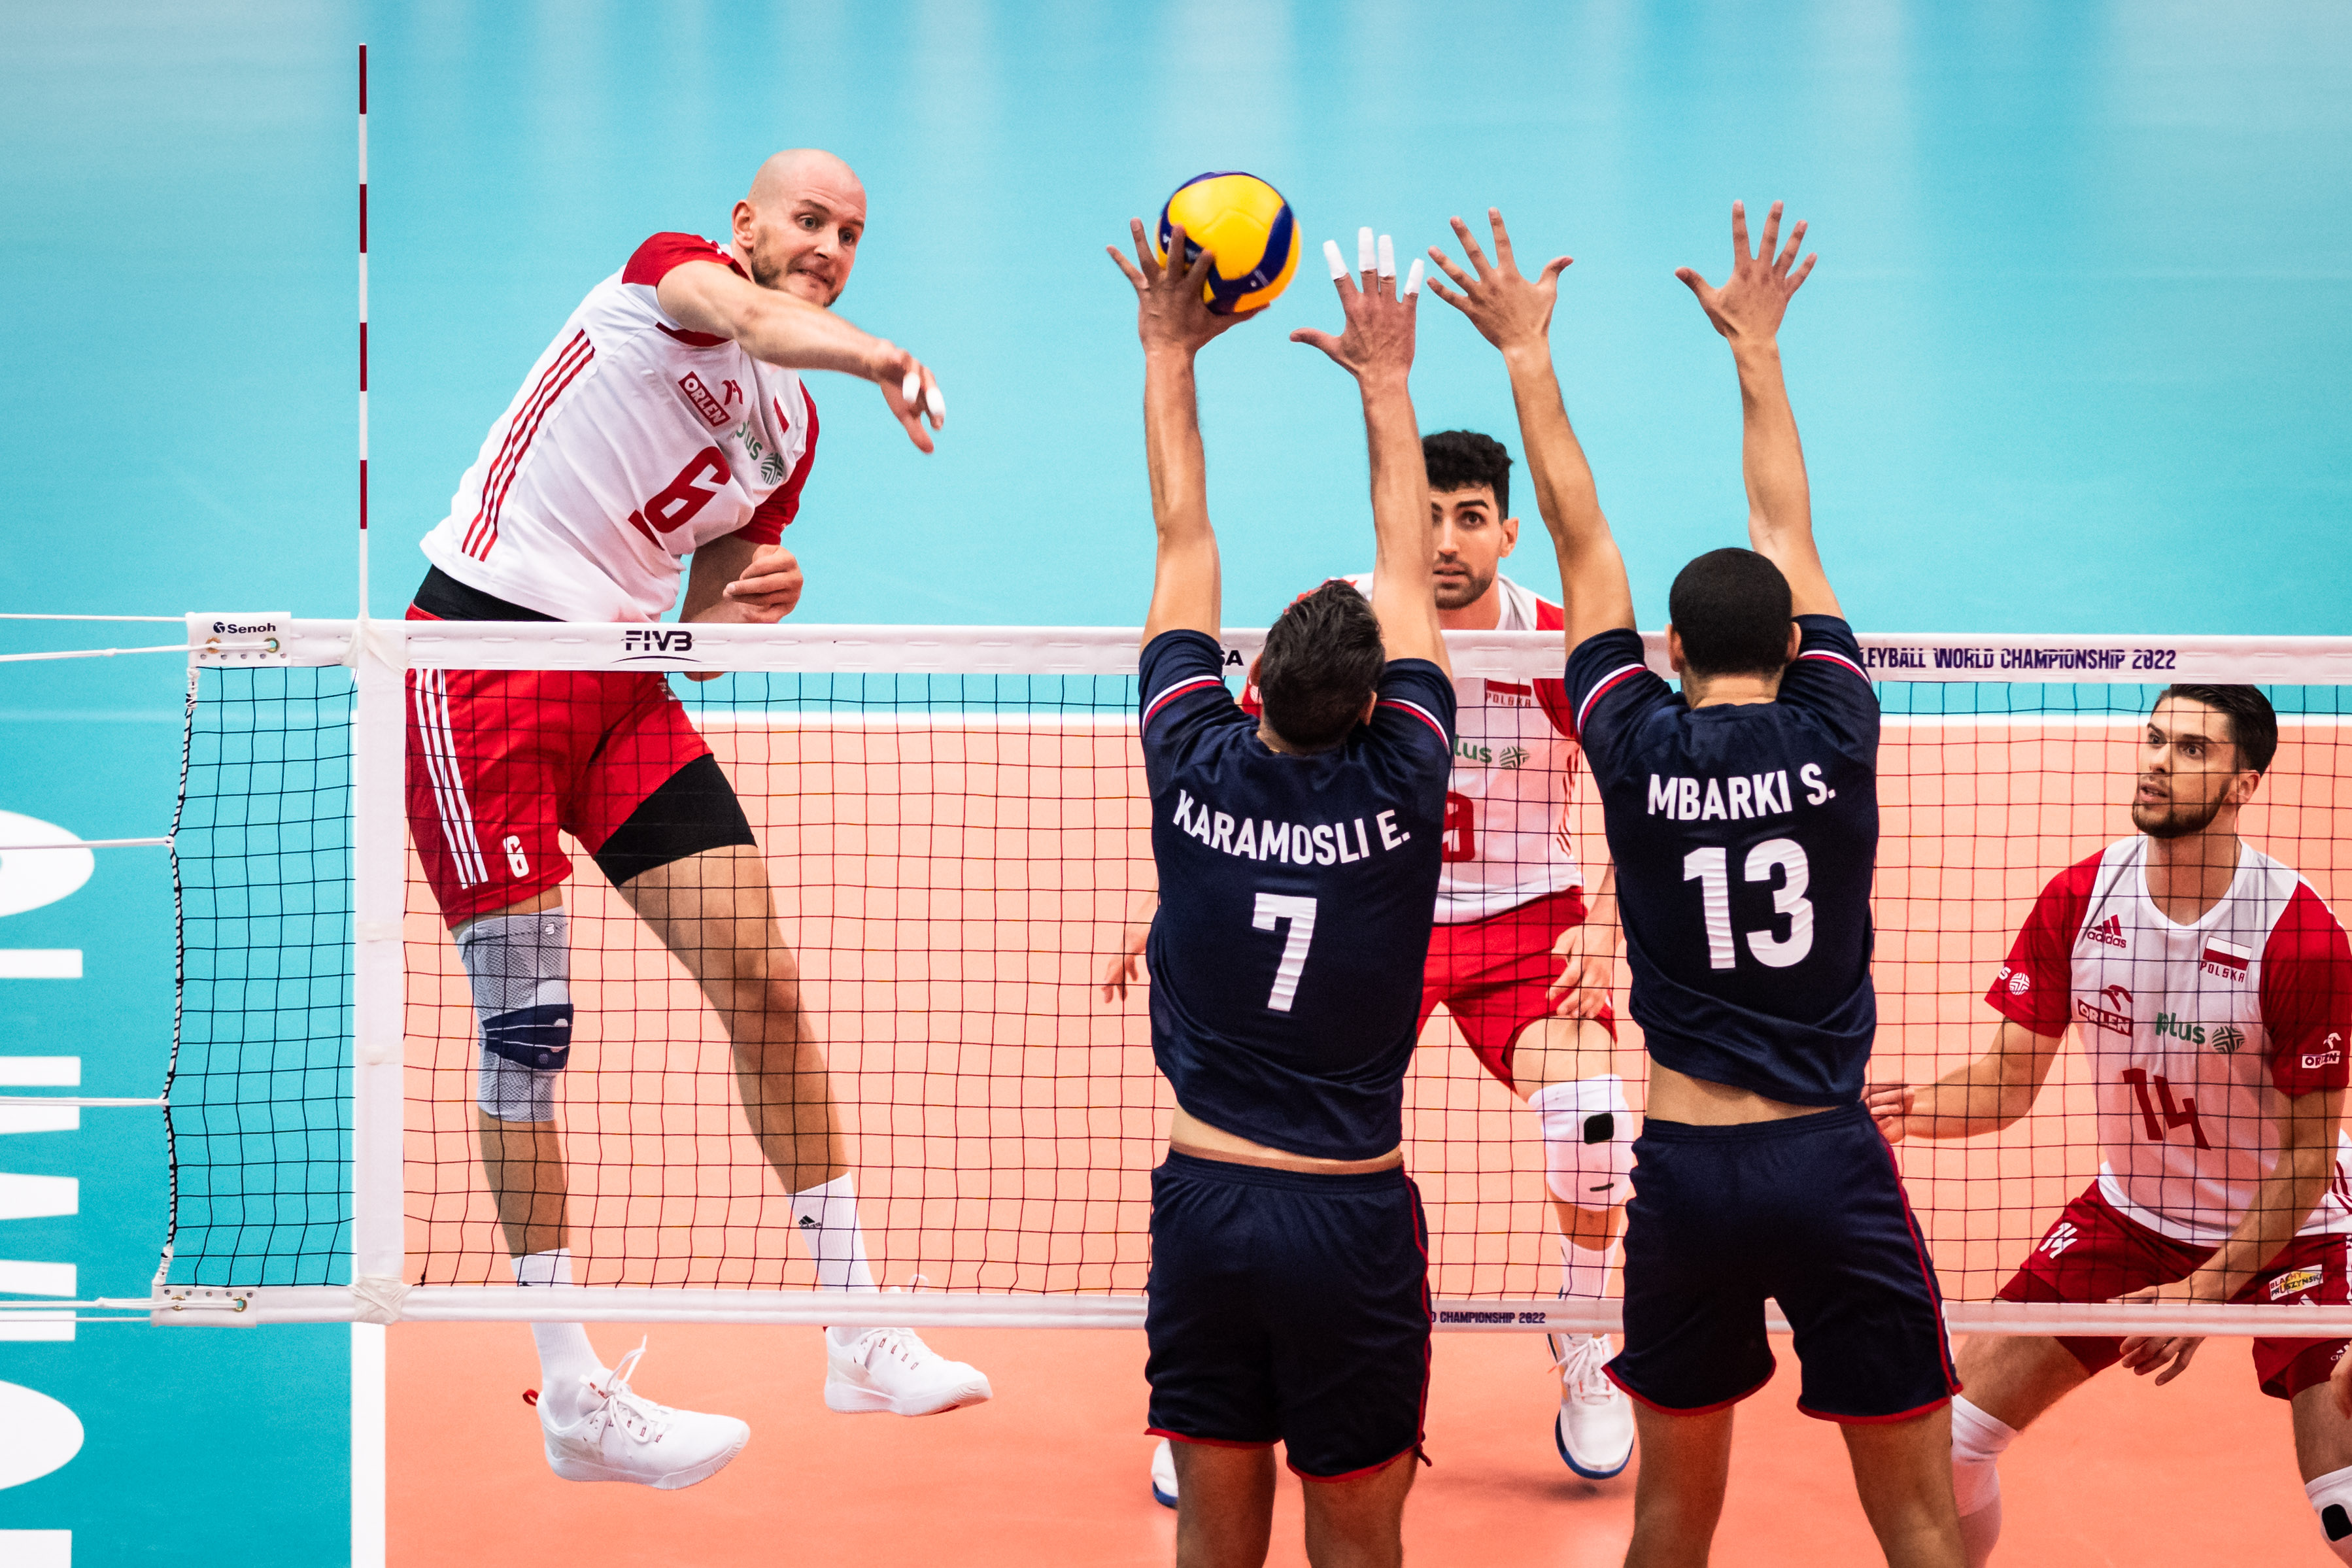 Poland maintain great form against Tunisia volleyballworld